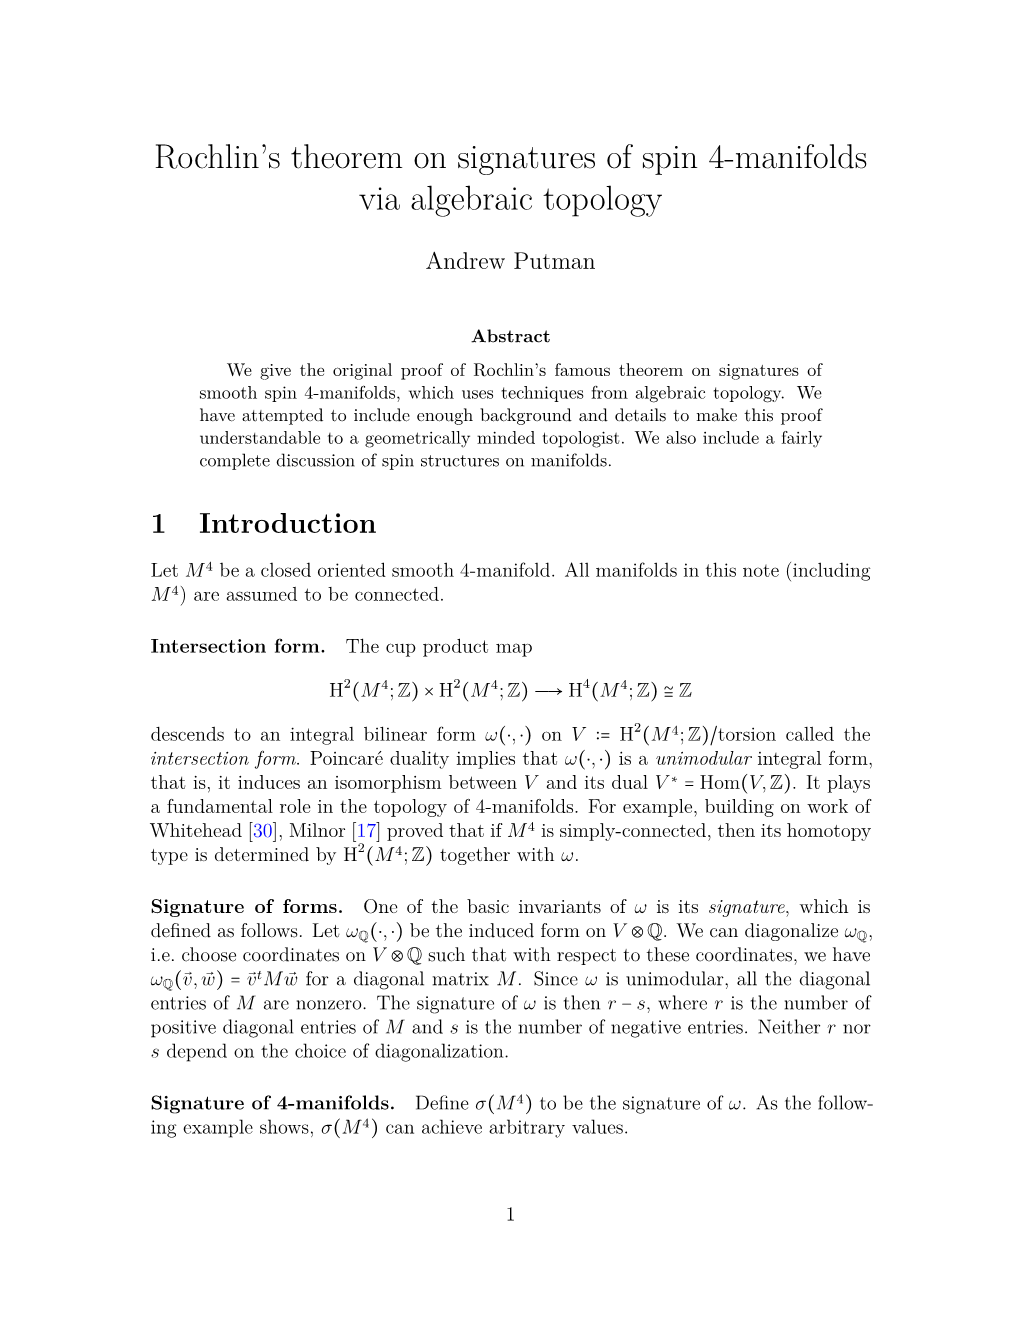 Rochlin's Theorem on Signatures of Spin 4-Manifolds Via Algebraic